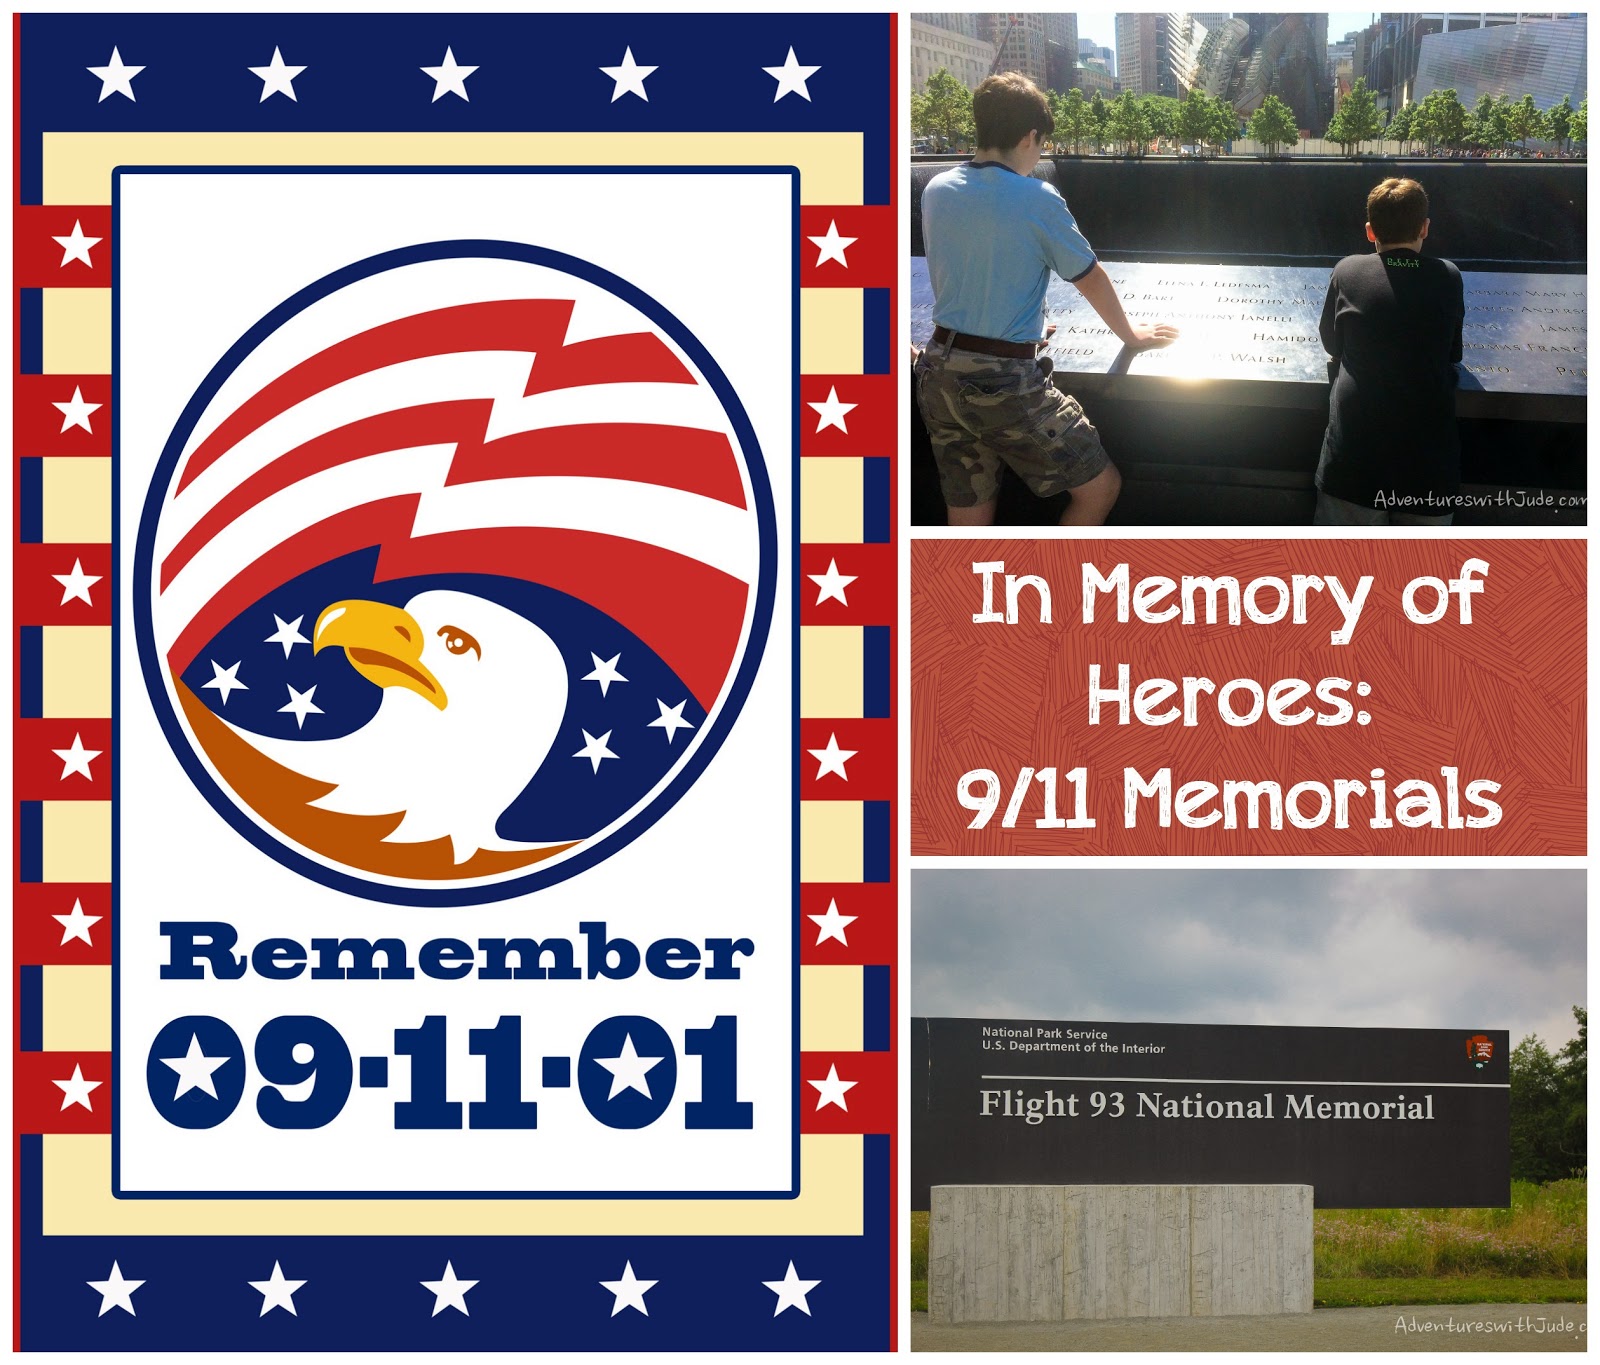 In Memory of Heroes: 9/11 Memorials